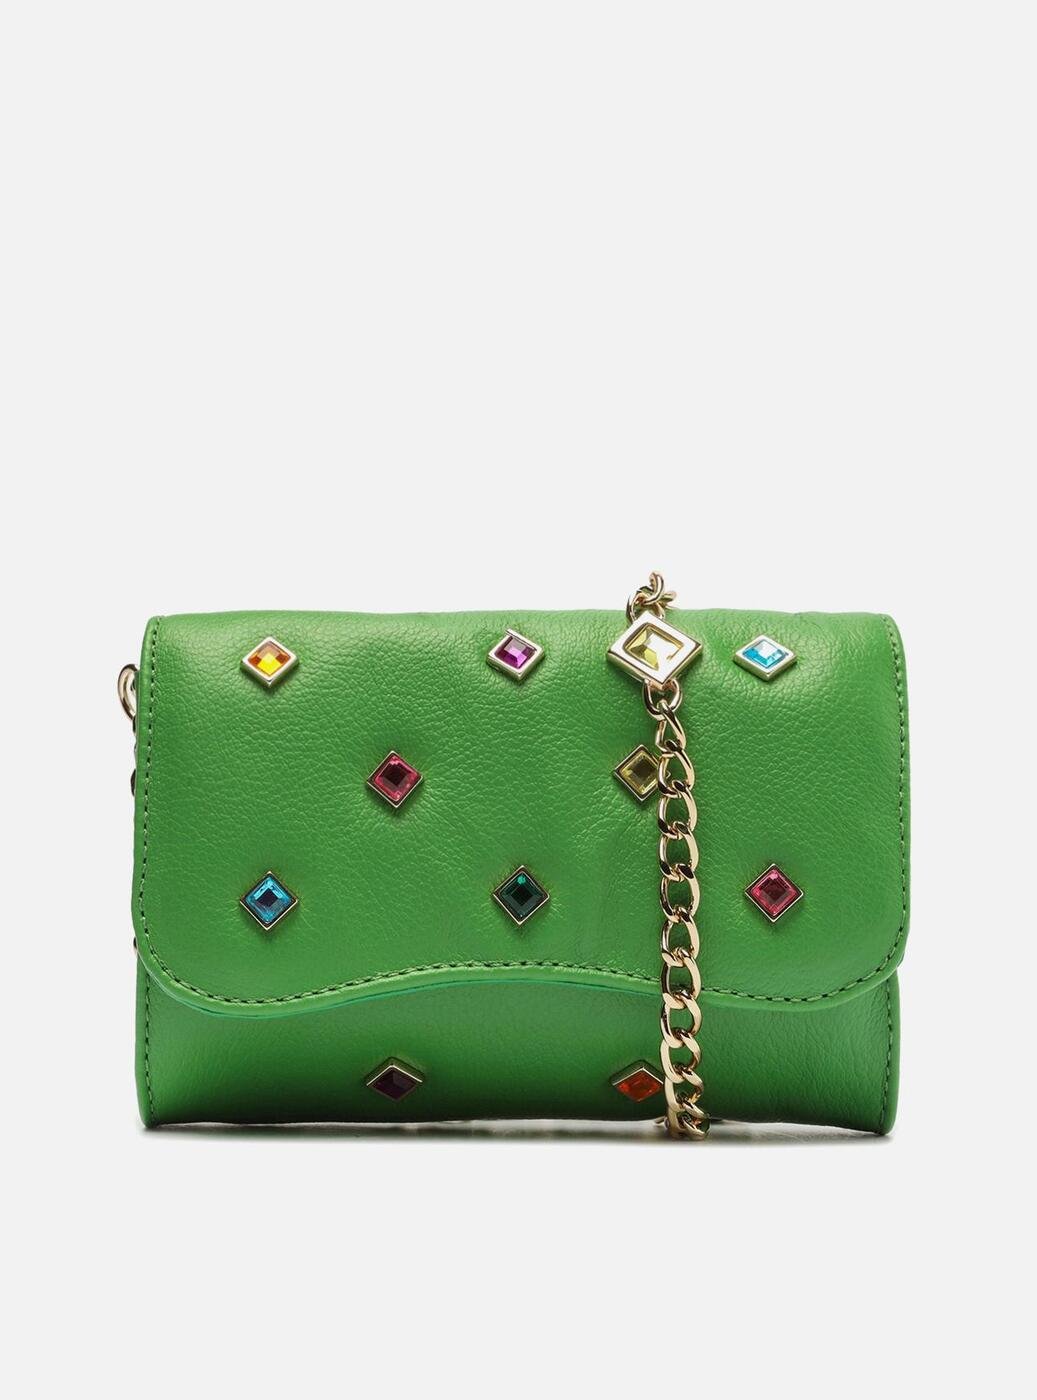 Mini Bag Tiracolo Verde Couro Mizz Stones | ZZ MALL